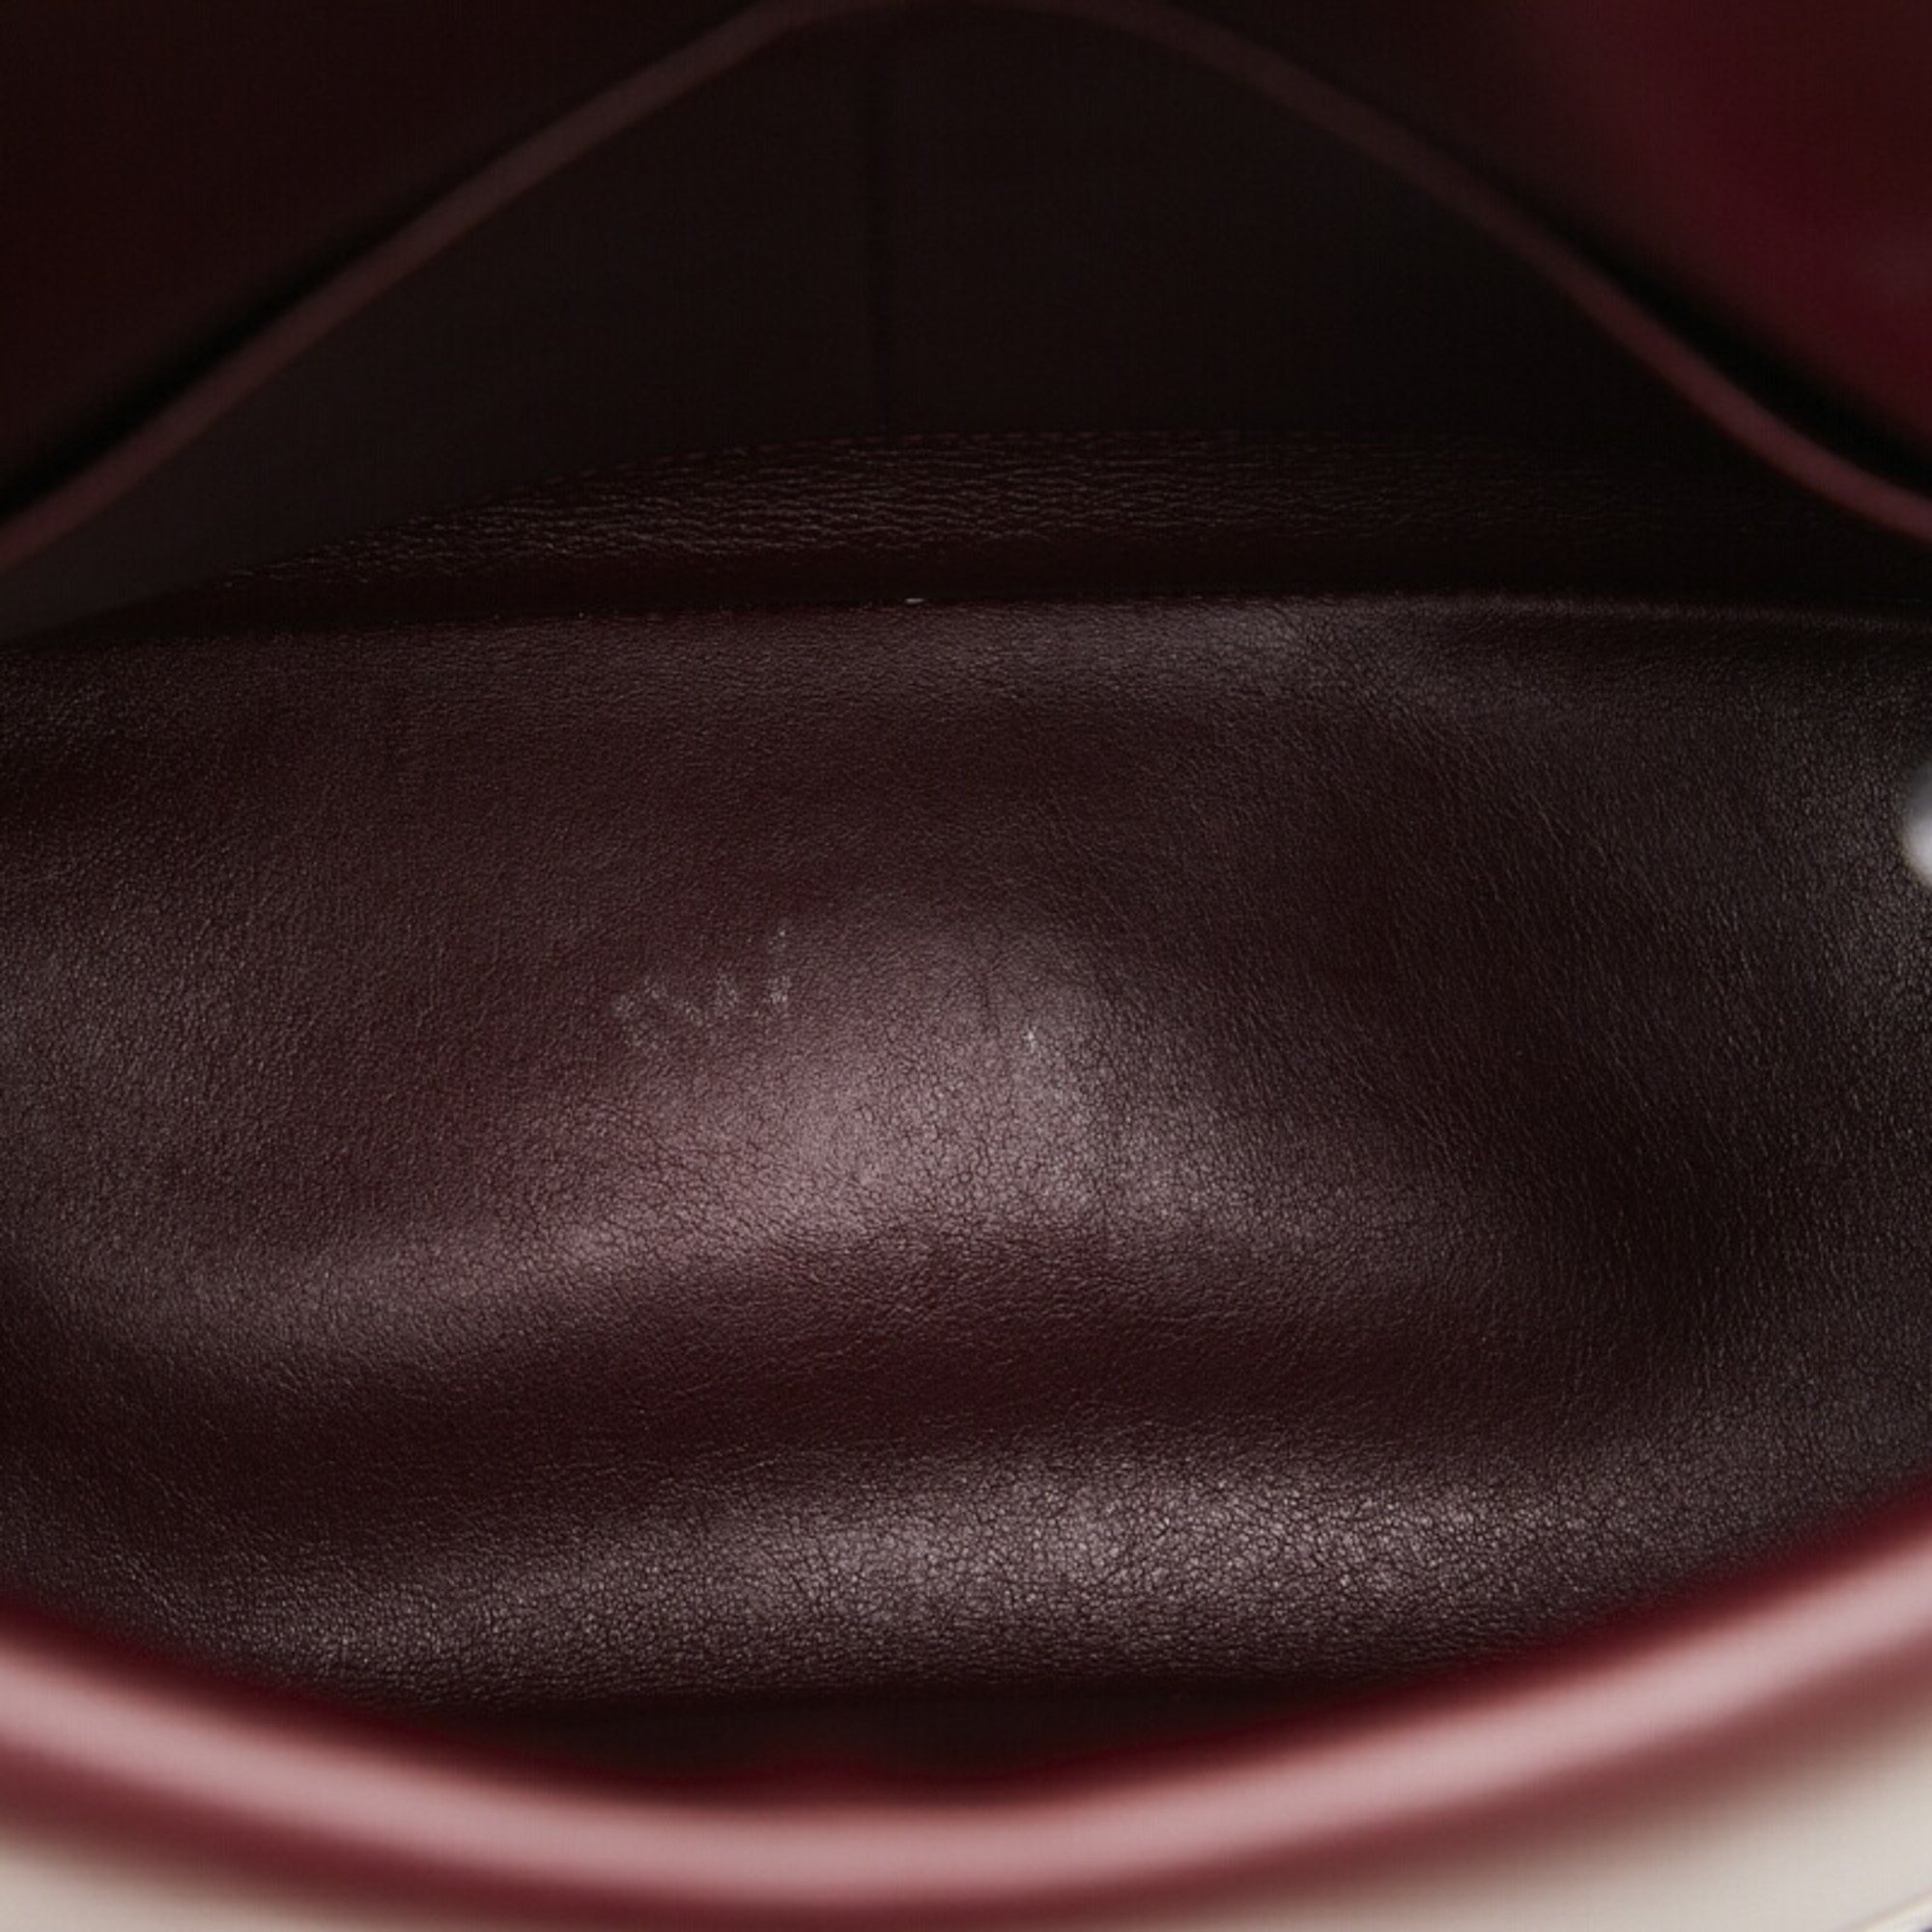 Christian Dior Dior Handbag Shoulder Bag Black Multicolor Leather Ladies